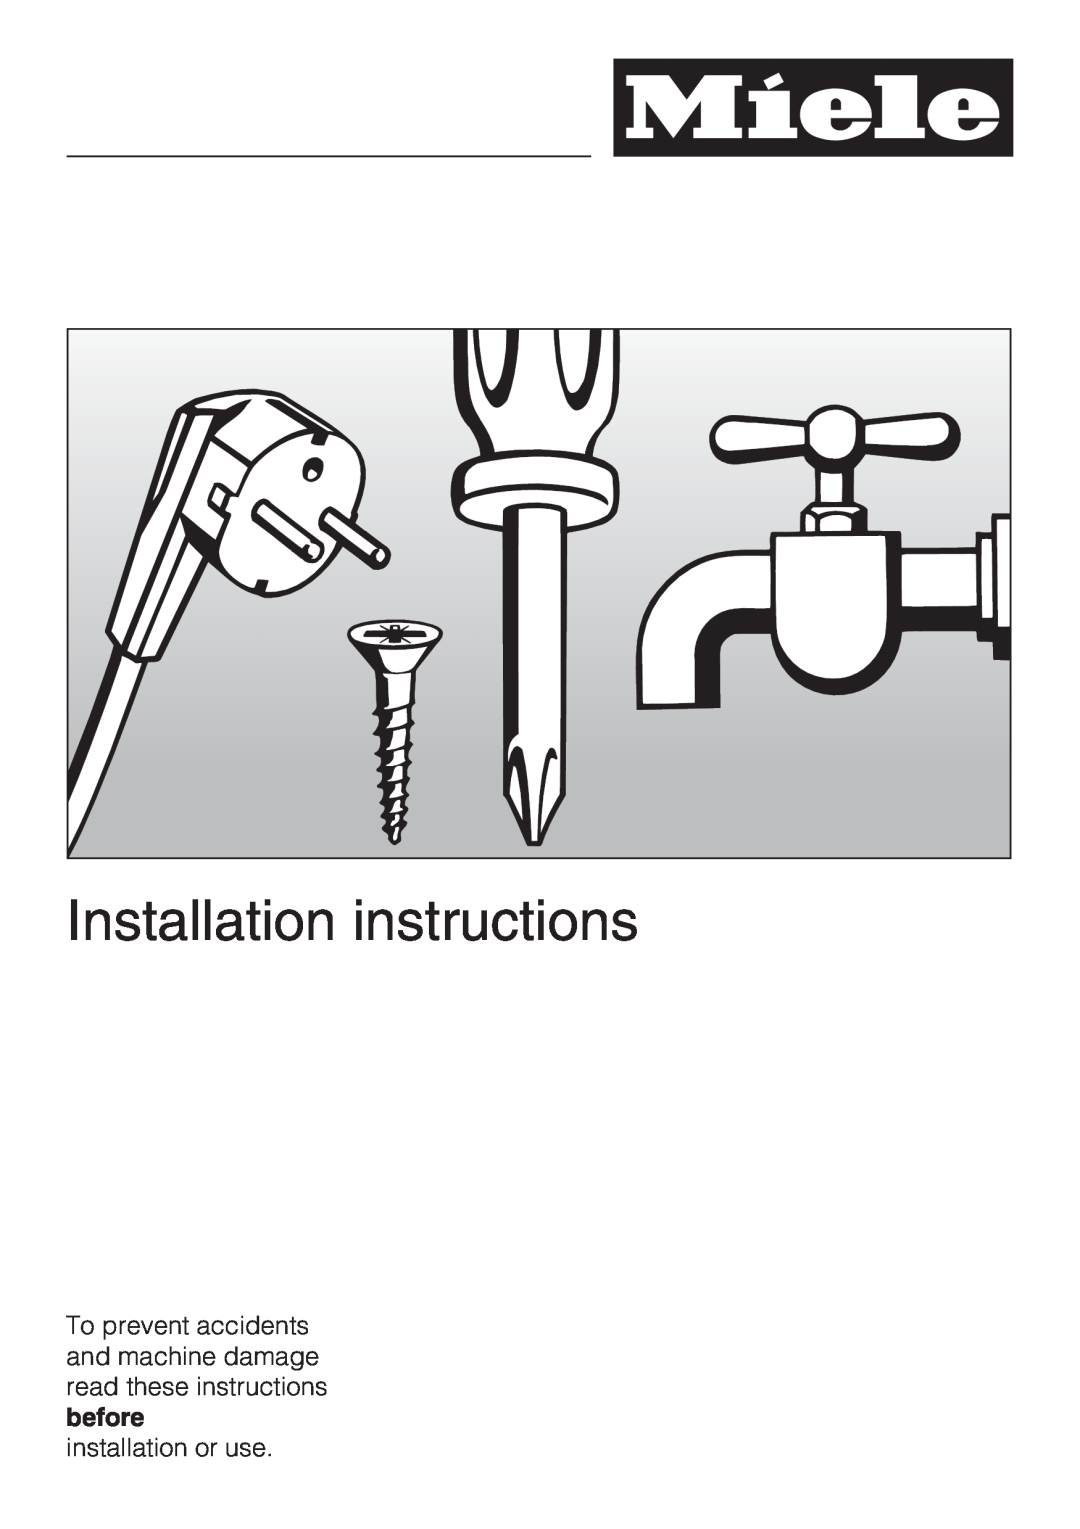 Miele KWT1601VI, KWT1611VI installation instructions Installation instructions, installation or use 